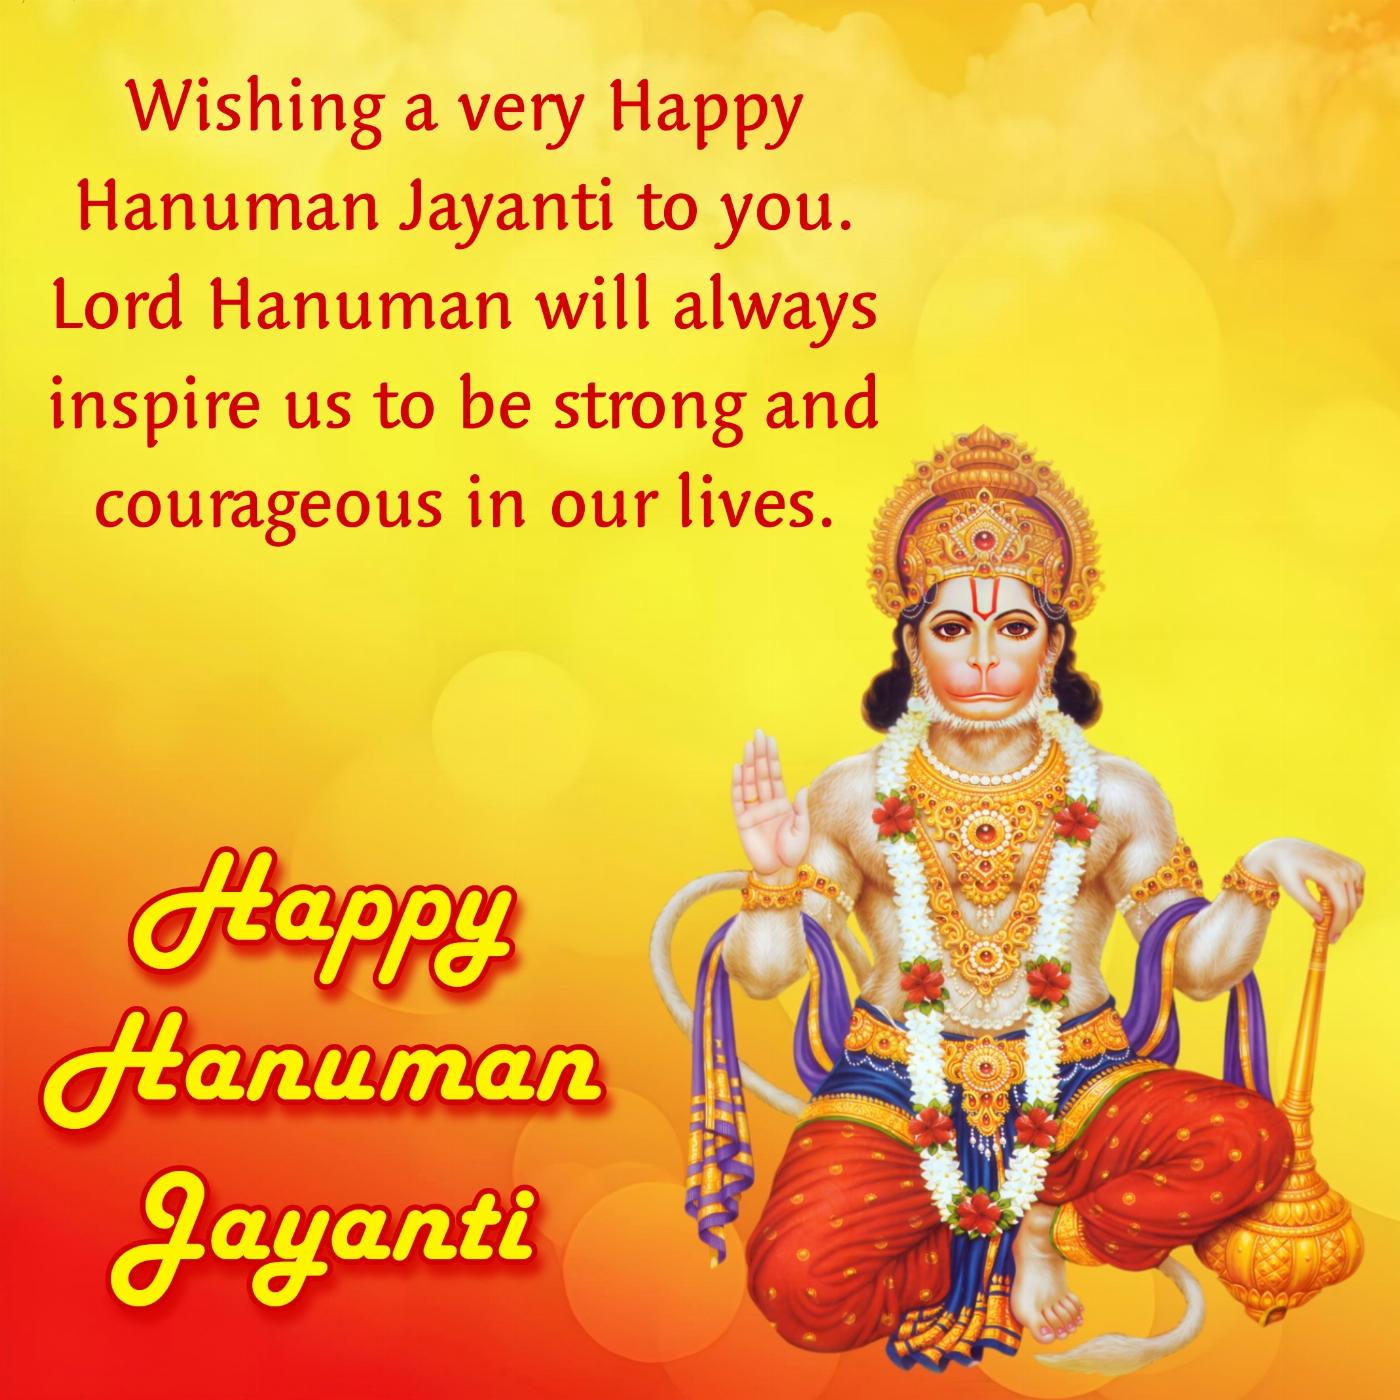 Wishing a very Happy Hanuman Jayanti to you